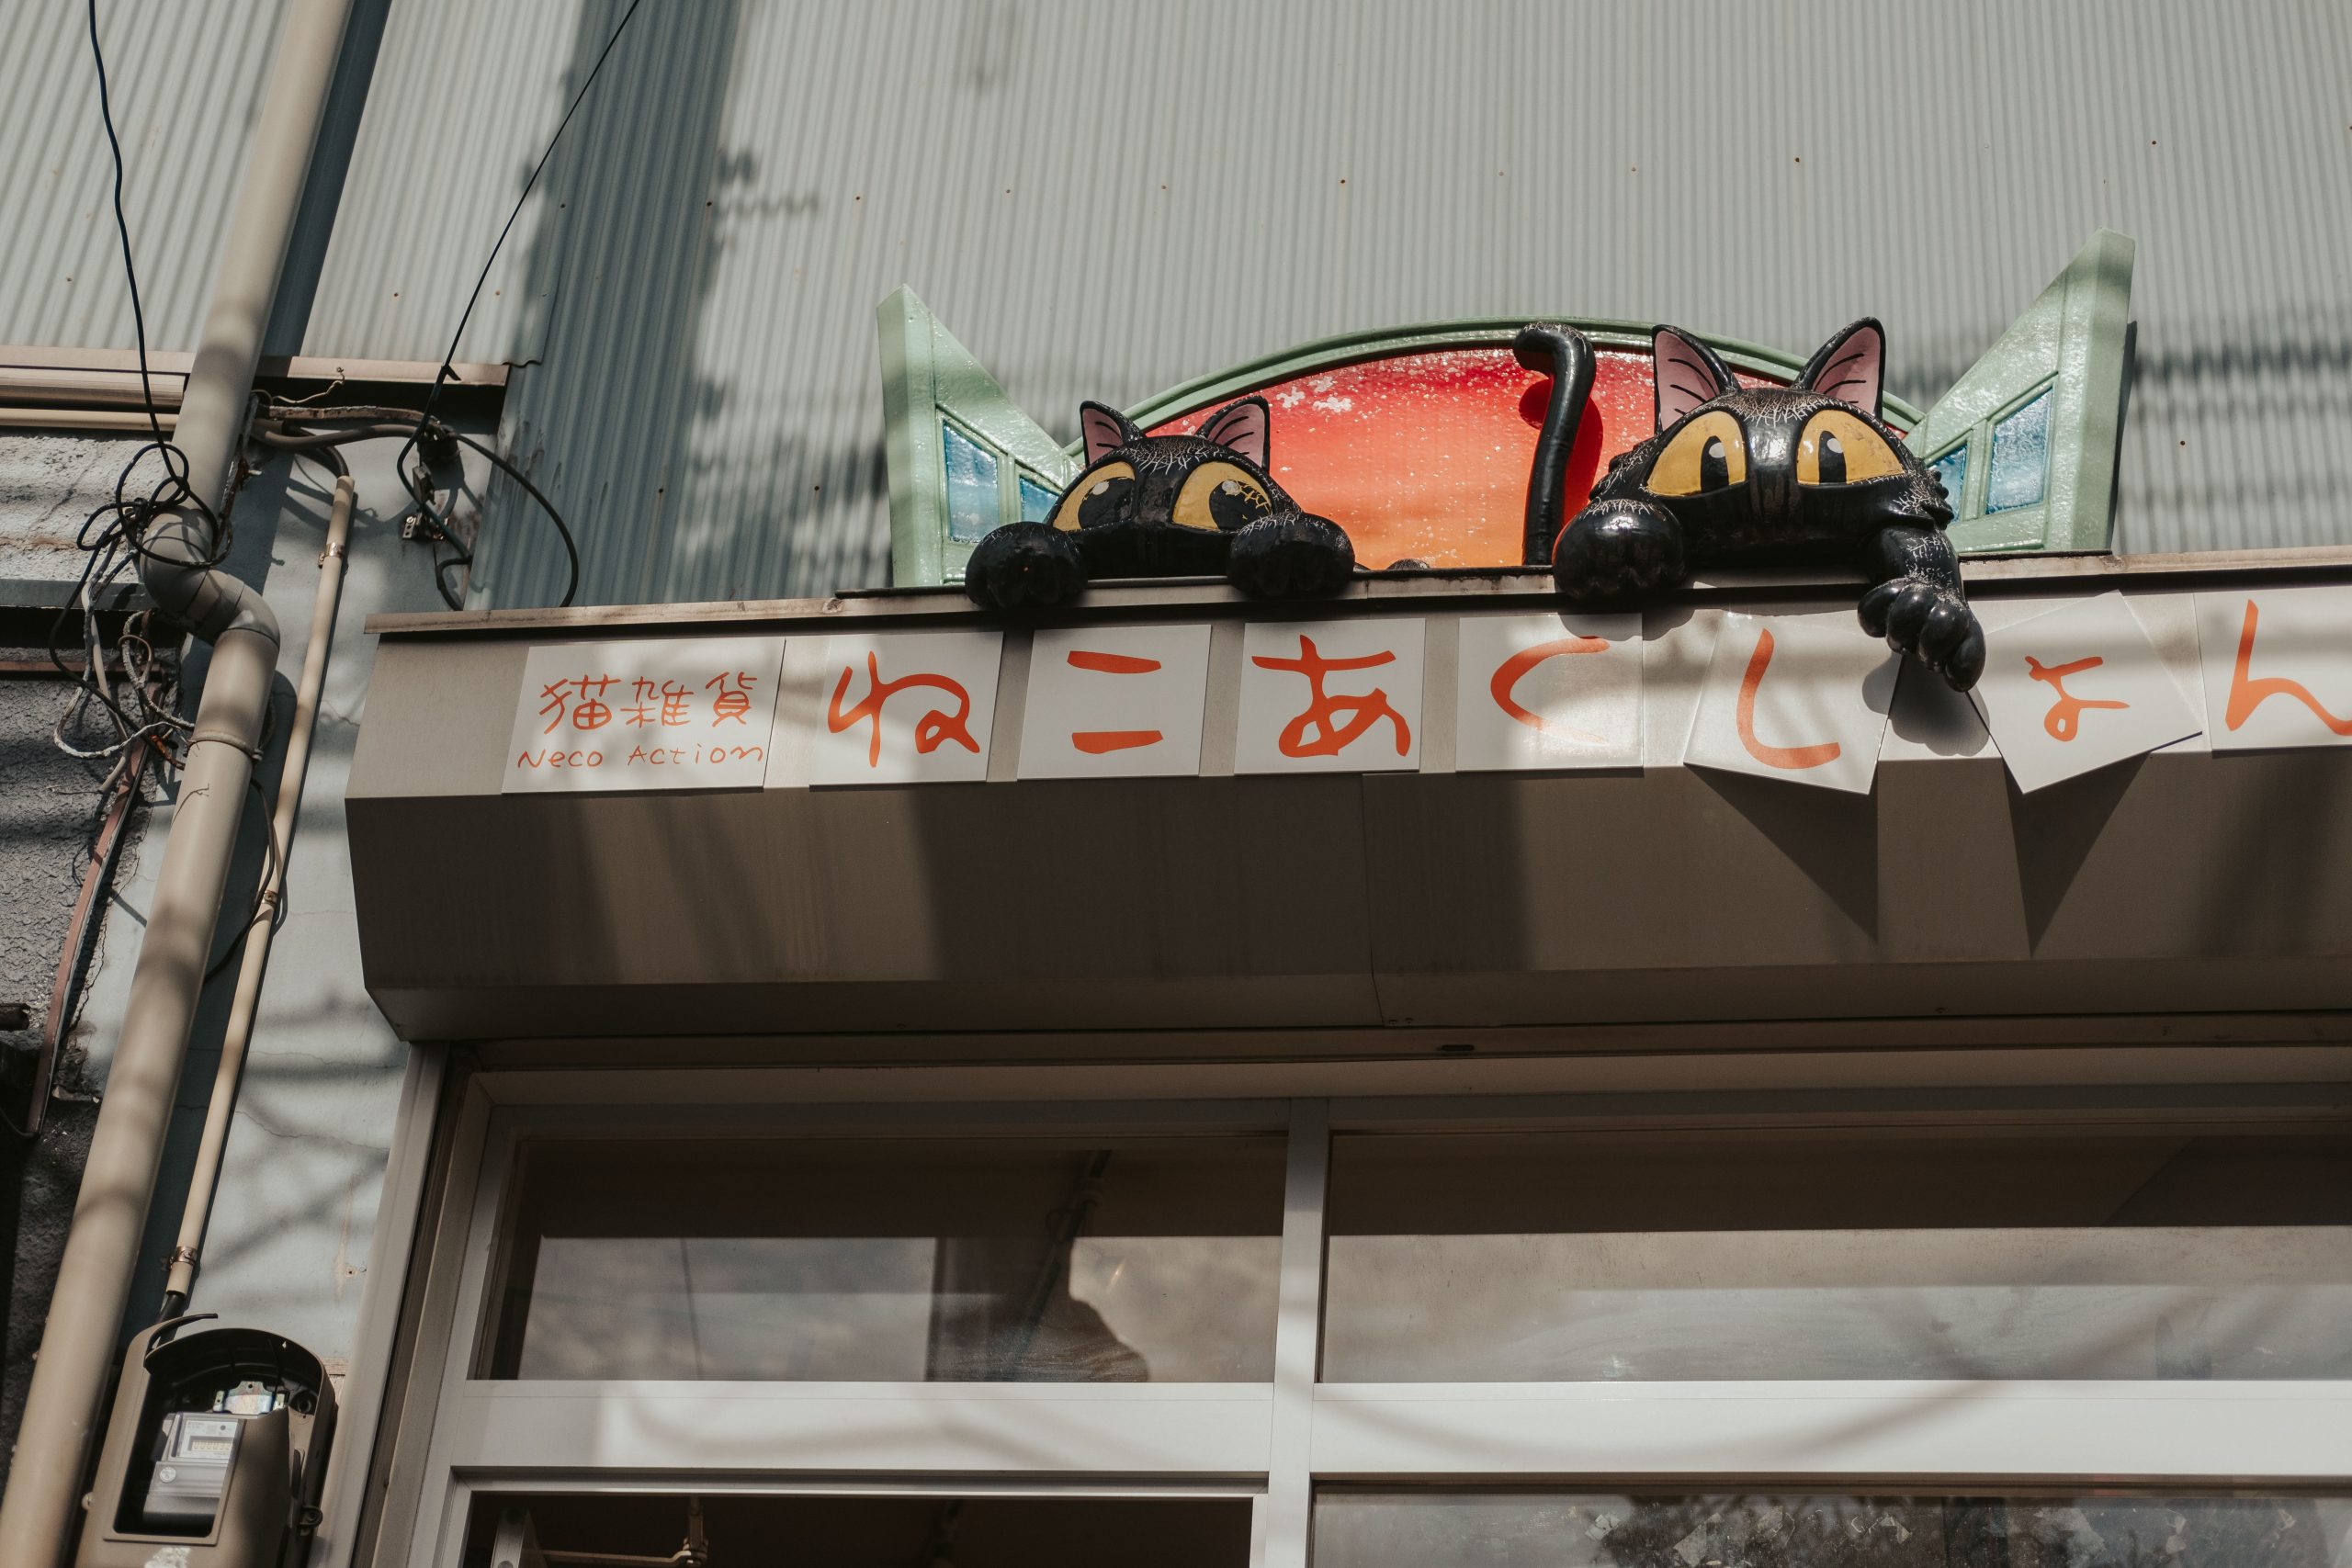 Neko action store front in Yanaka Ginza